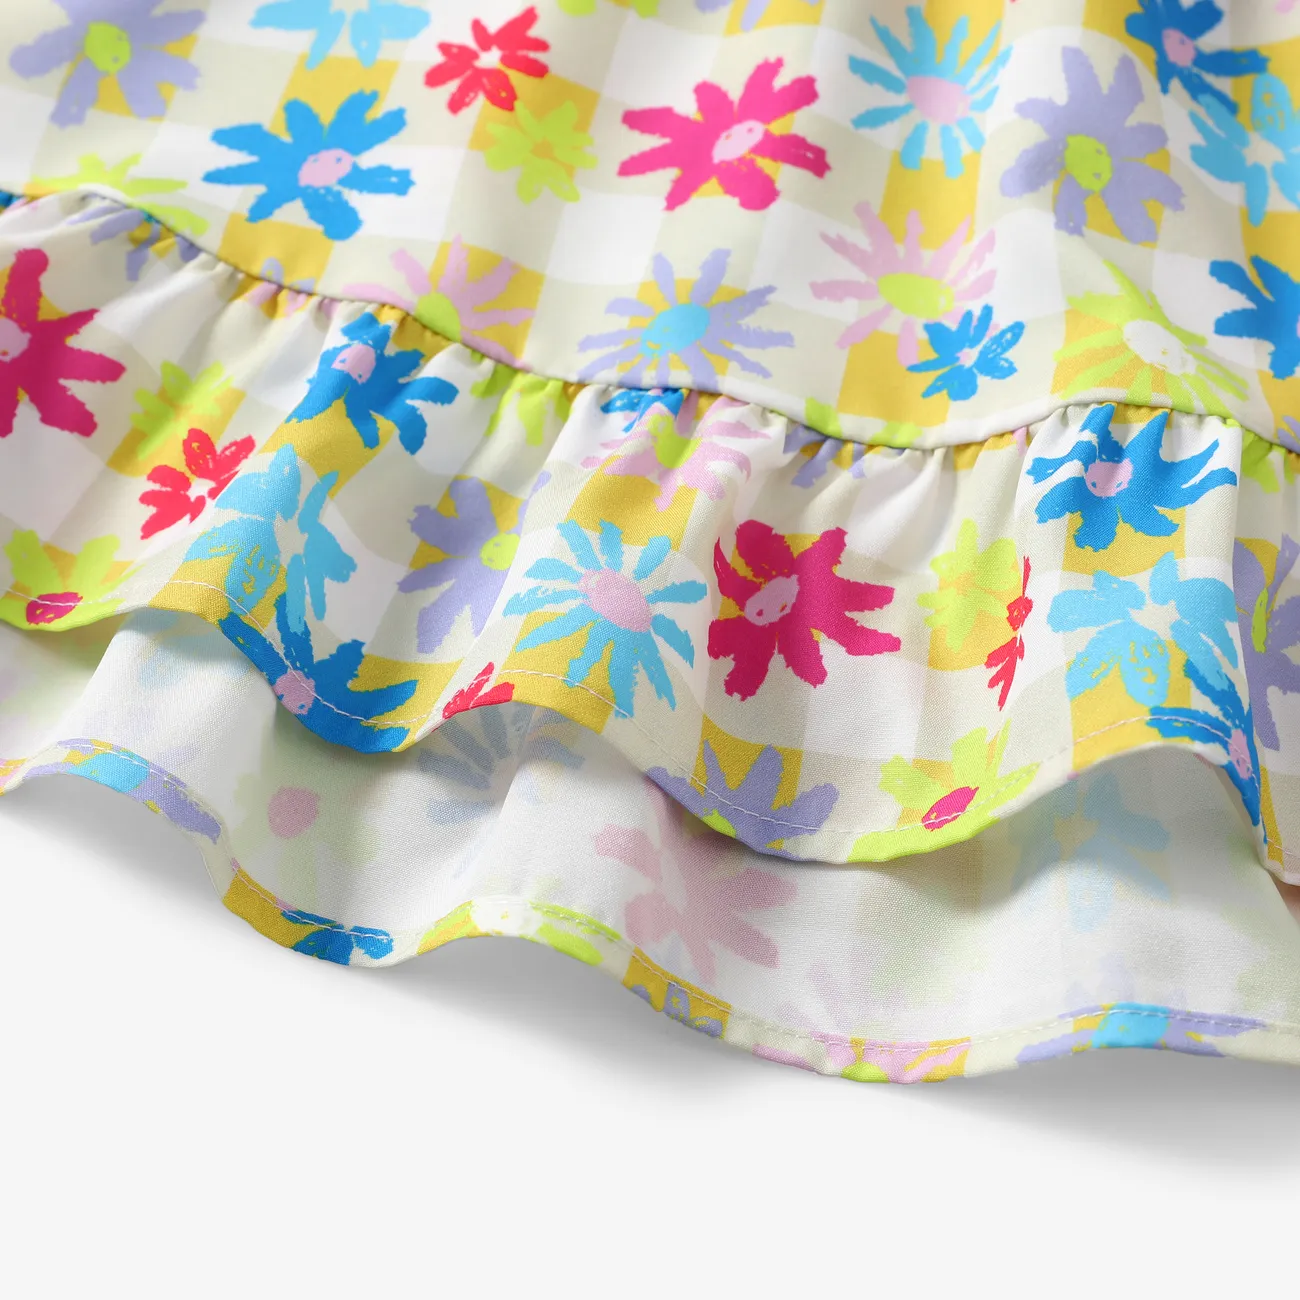 Peppa Pig Toddler Girls 1pc Floral Character Print Bowknot Strap Sleeveless Dress Yellow big image 1